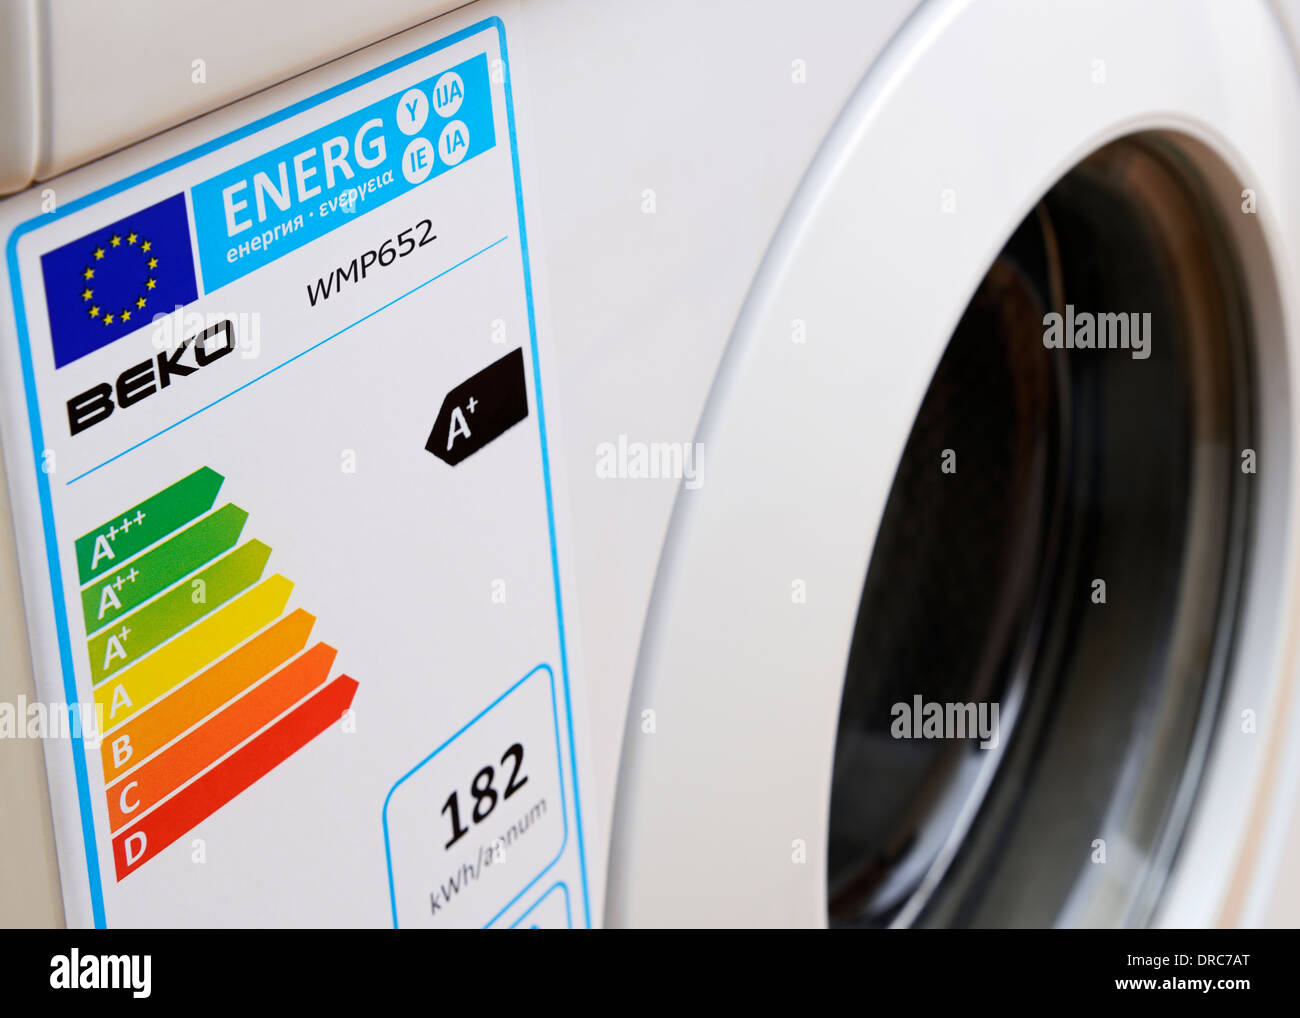 Energy Rating Label on a Washing Machine Stock Photo